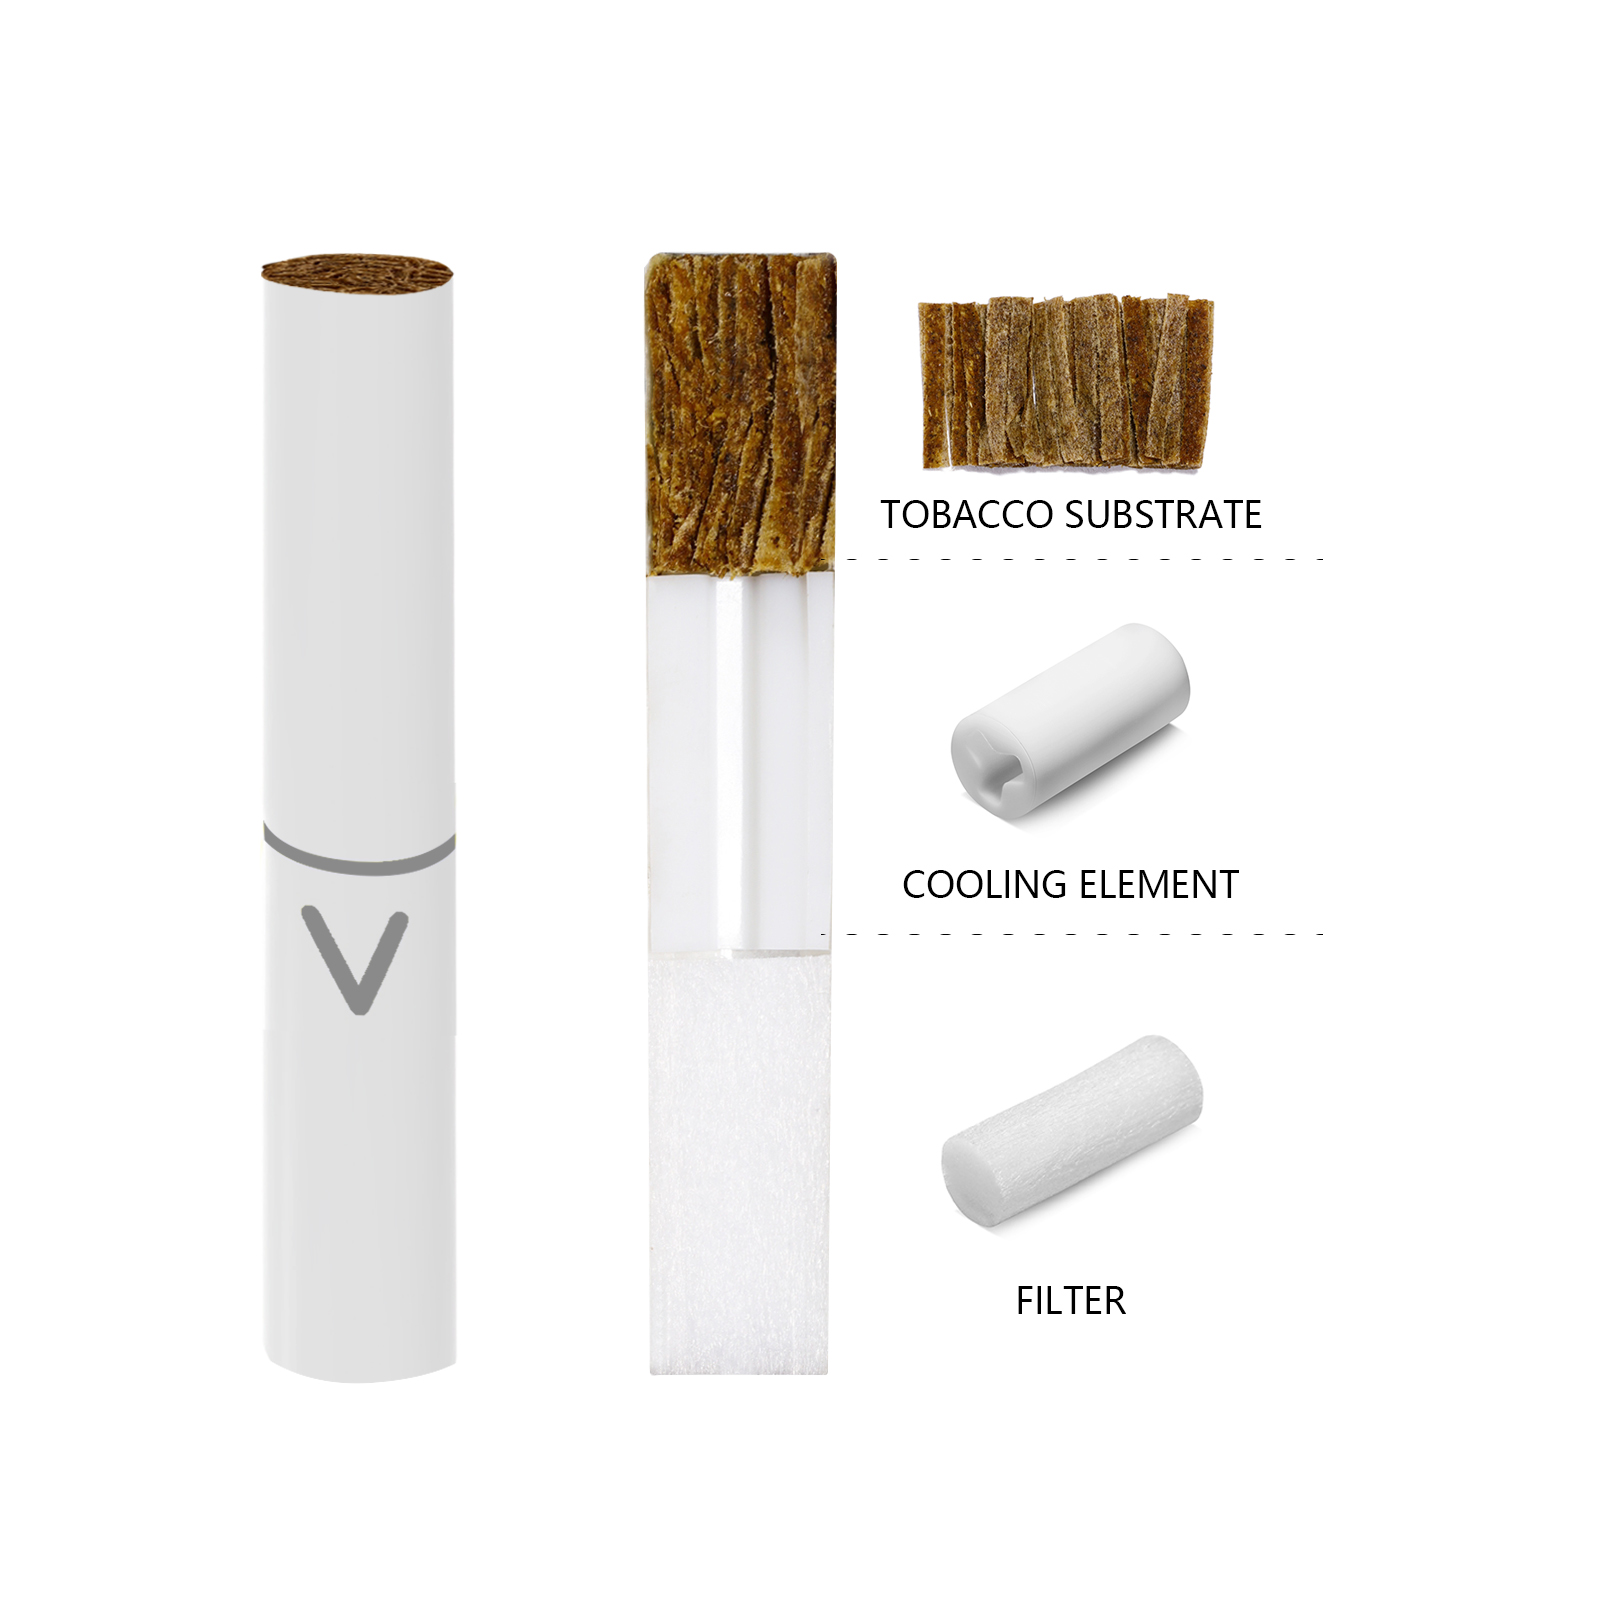 Tobacco heat sticks for iqo s marlbor o heet s cigarett e heating hn b device with Yellow natural flavor